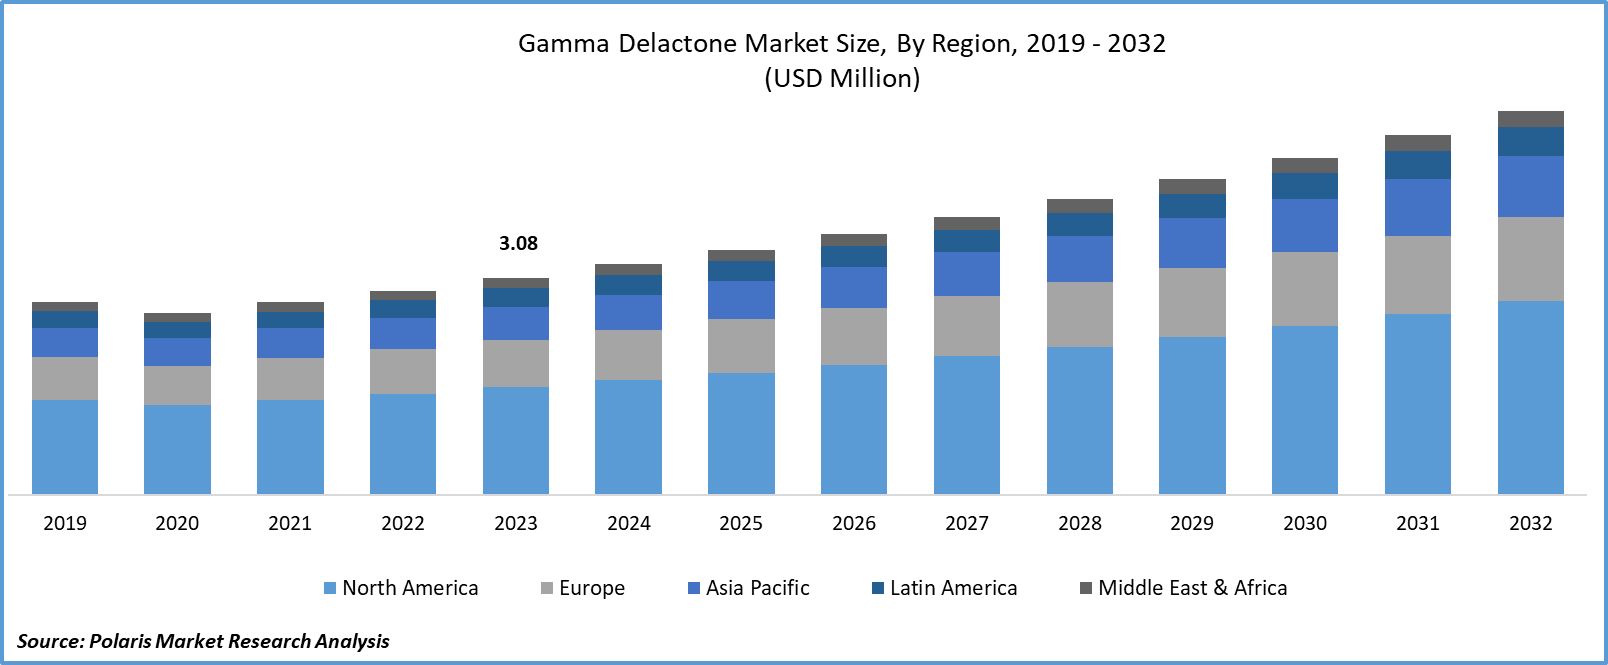 Gamma Decalactone Market Size